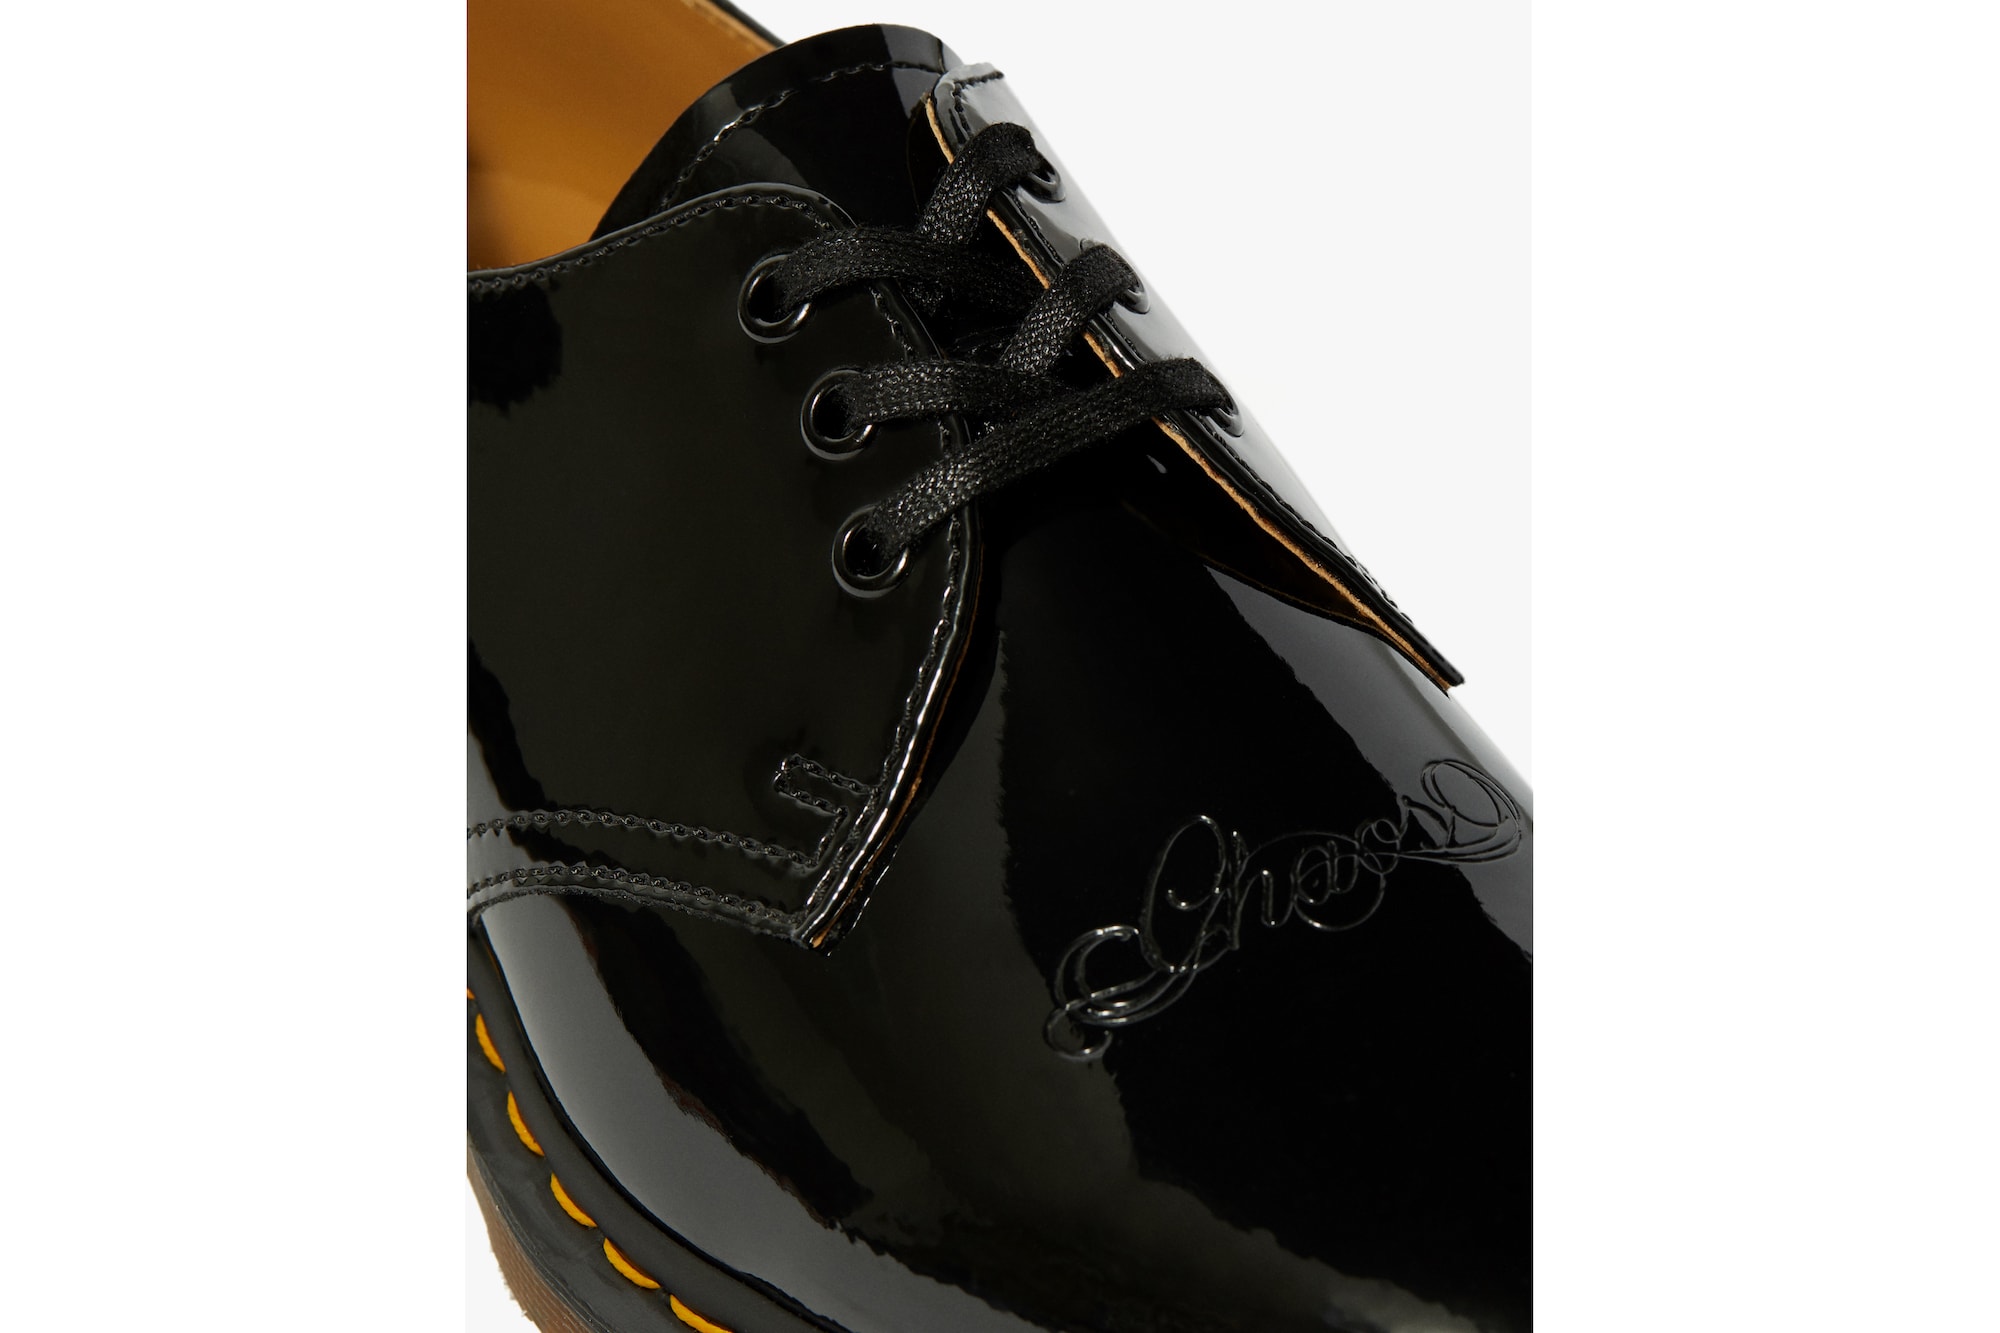 UNDERCOVER x Dr. Martens Patent Leather Shoes Collaboration Collection Drop Black Beige 